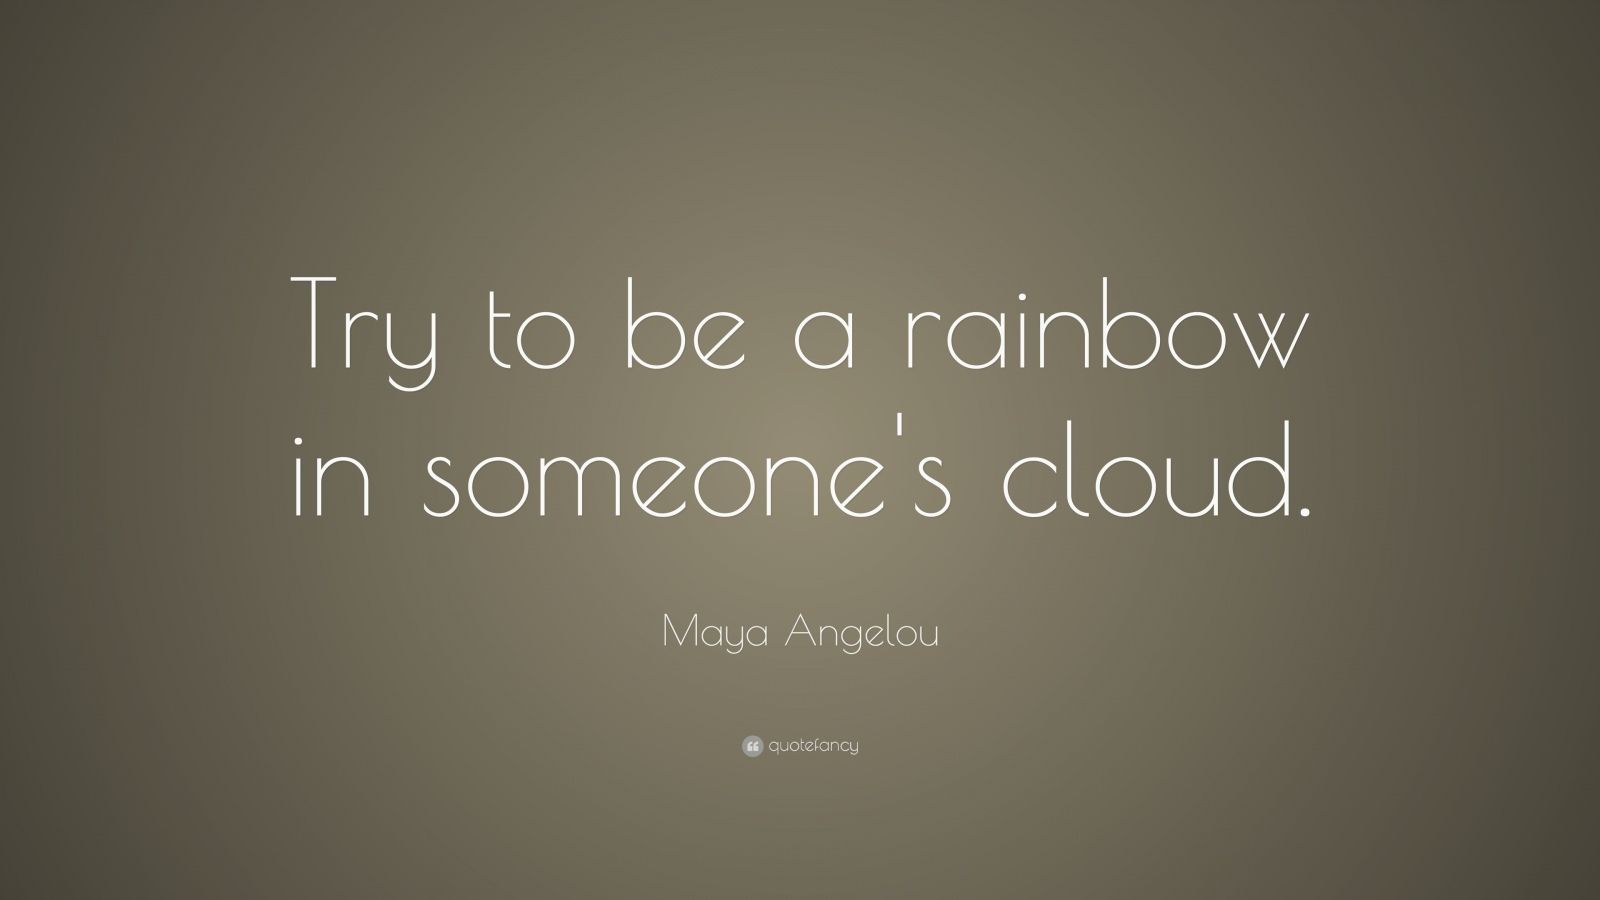 maya angelou rainbow quote